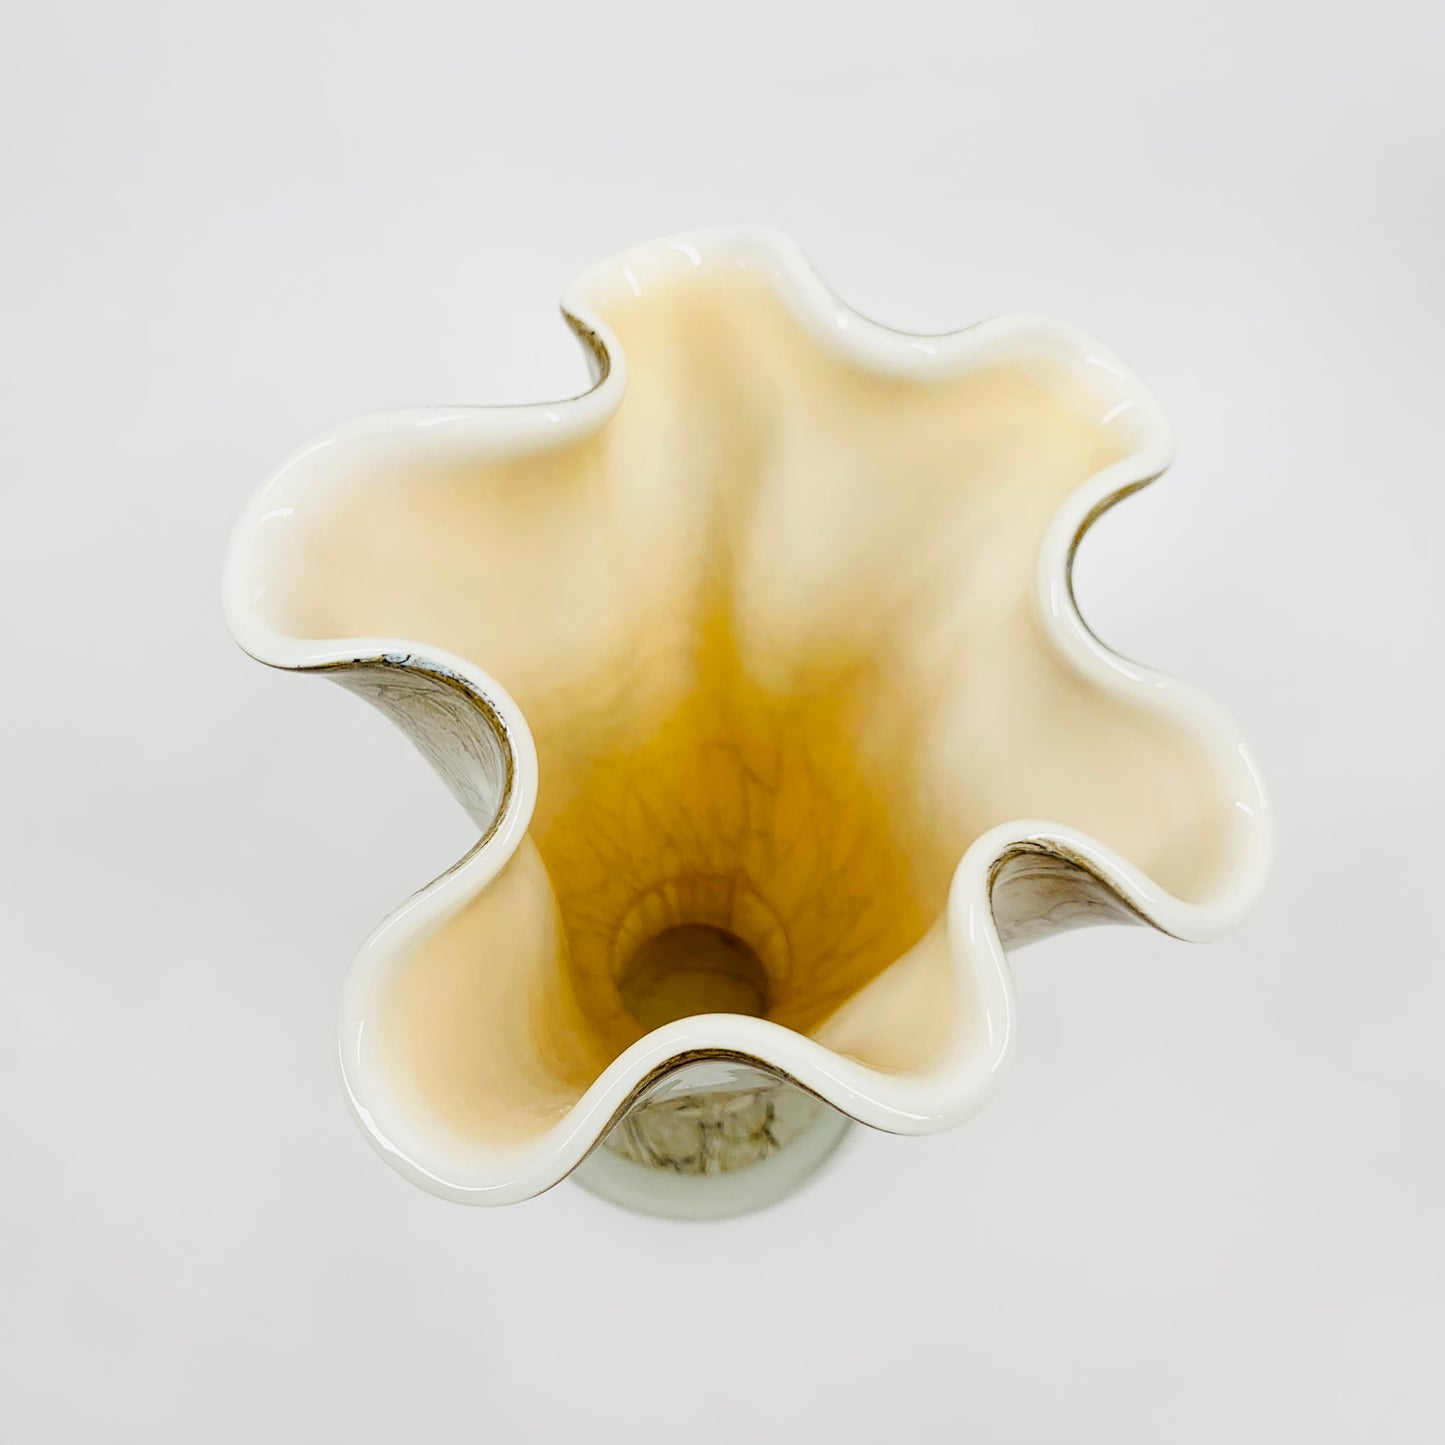 Vintage Japanese marble cased glass handkerchief vase